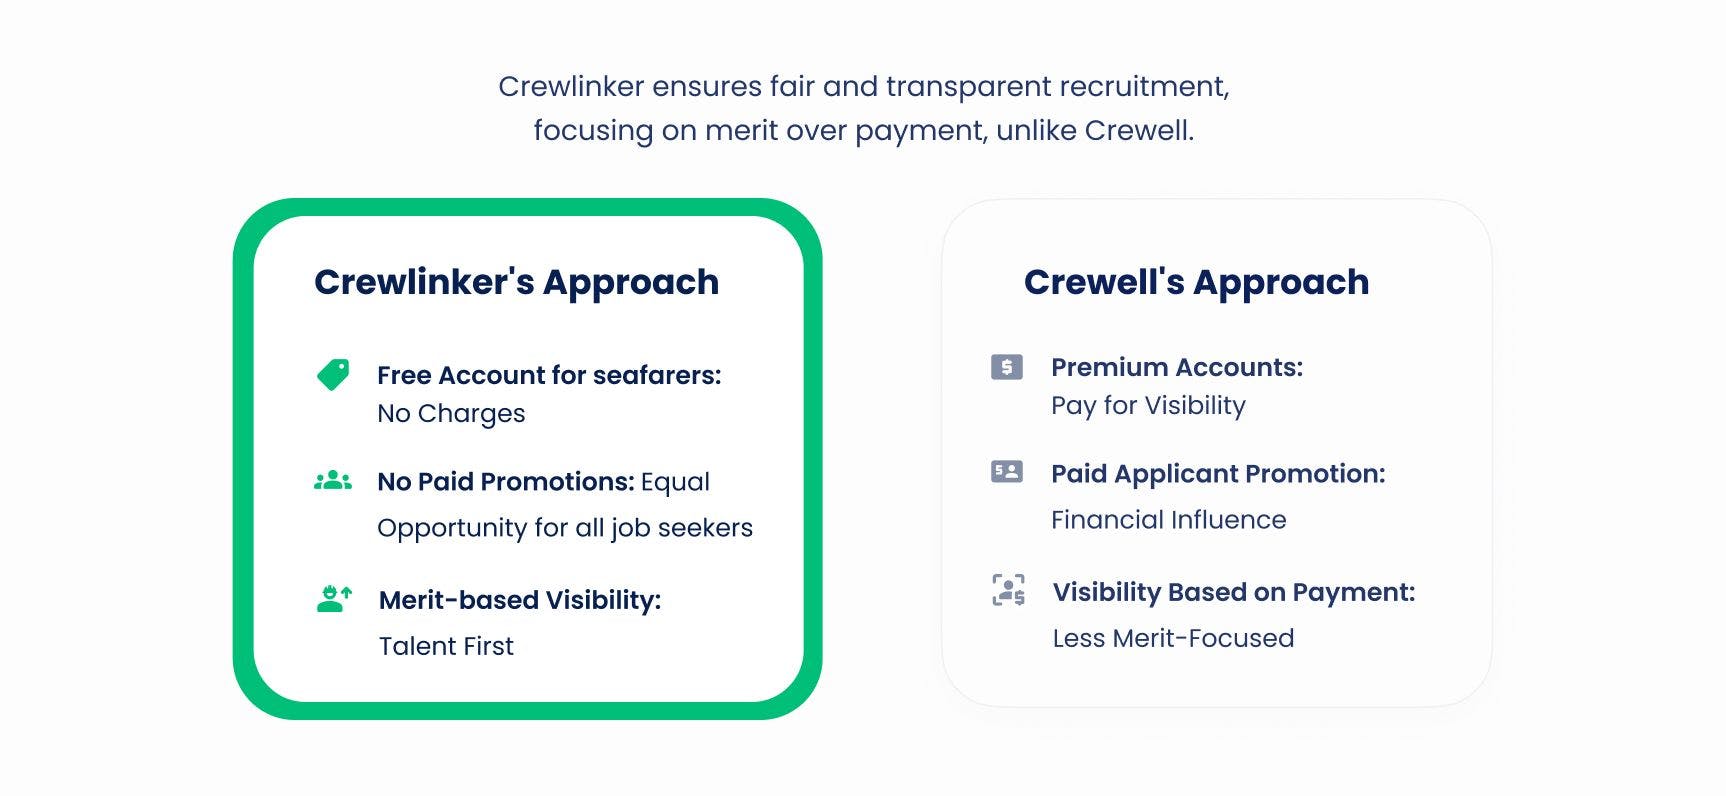 Crewlinker ensures fair and transparent recruitment